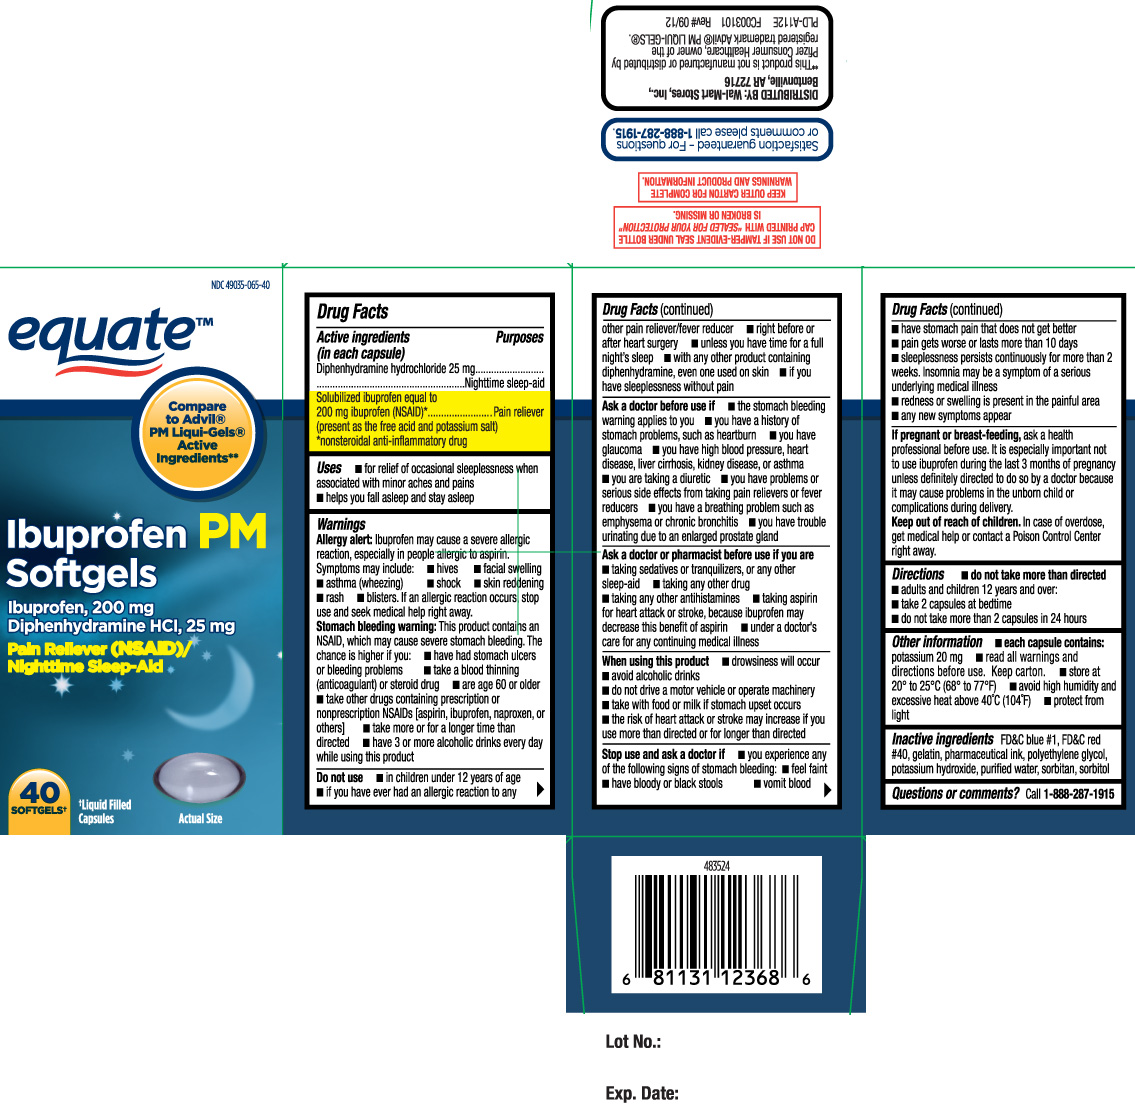 Diphenhydramine Hydrochloride 25 mg, Solublized ibuprofen equal to 200 mg ibuprofen (NSAID)* (present as the free acid and potassium salt) *nonsteroidal anti-inflammatory drug